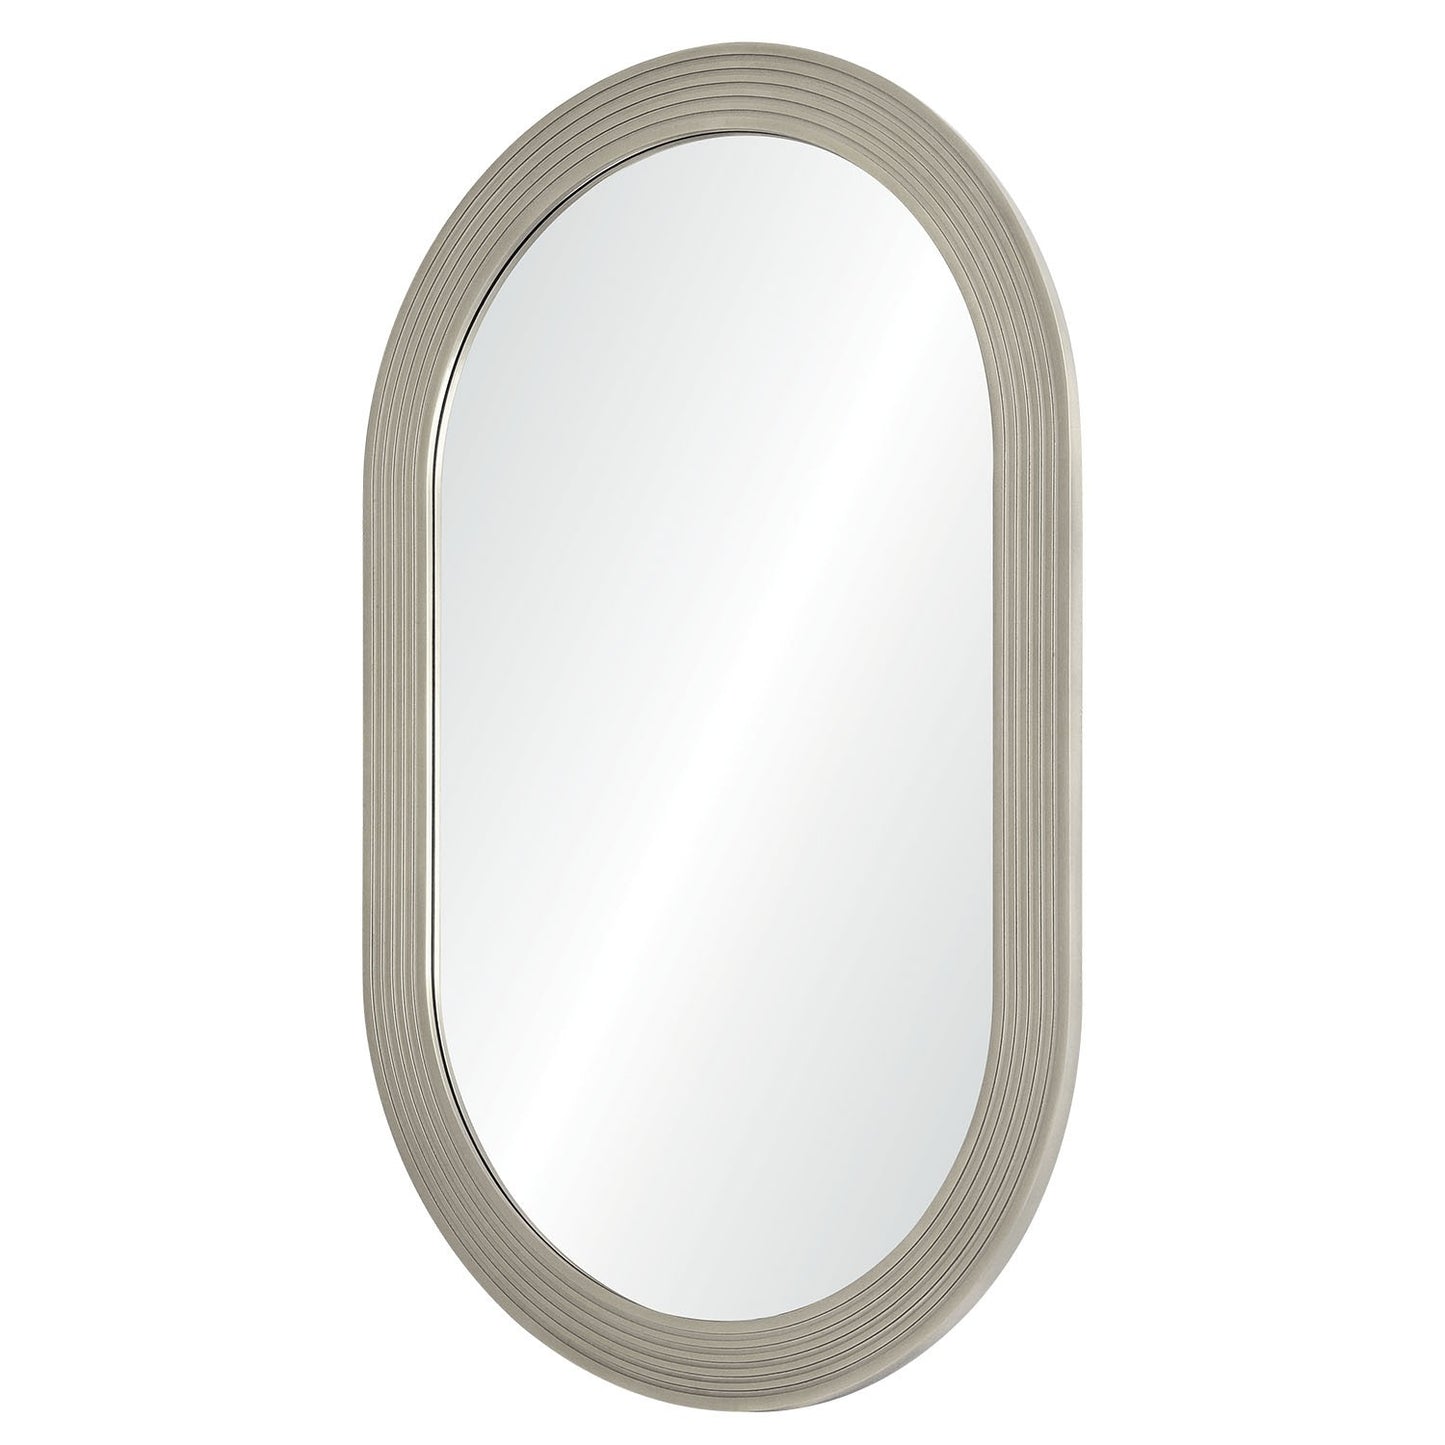 Augusta Oval Mirror